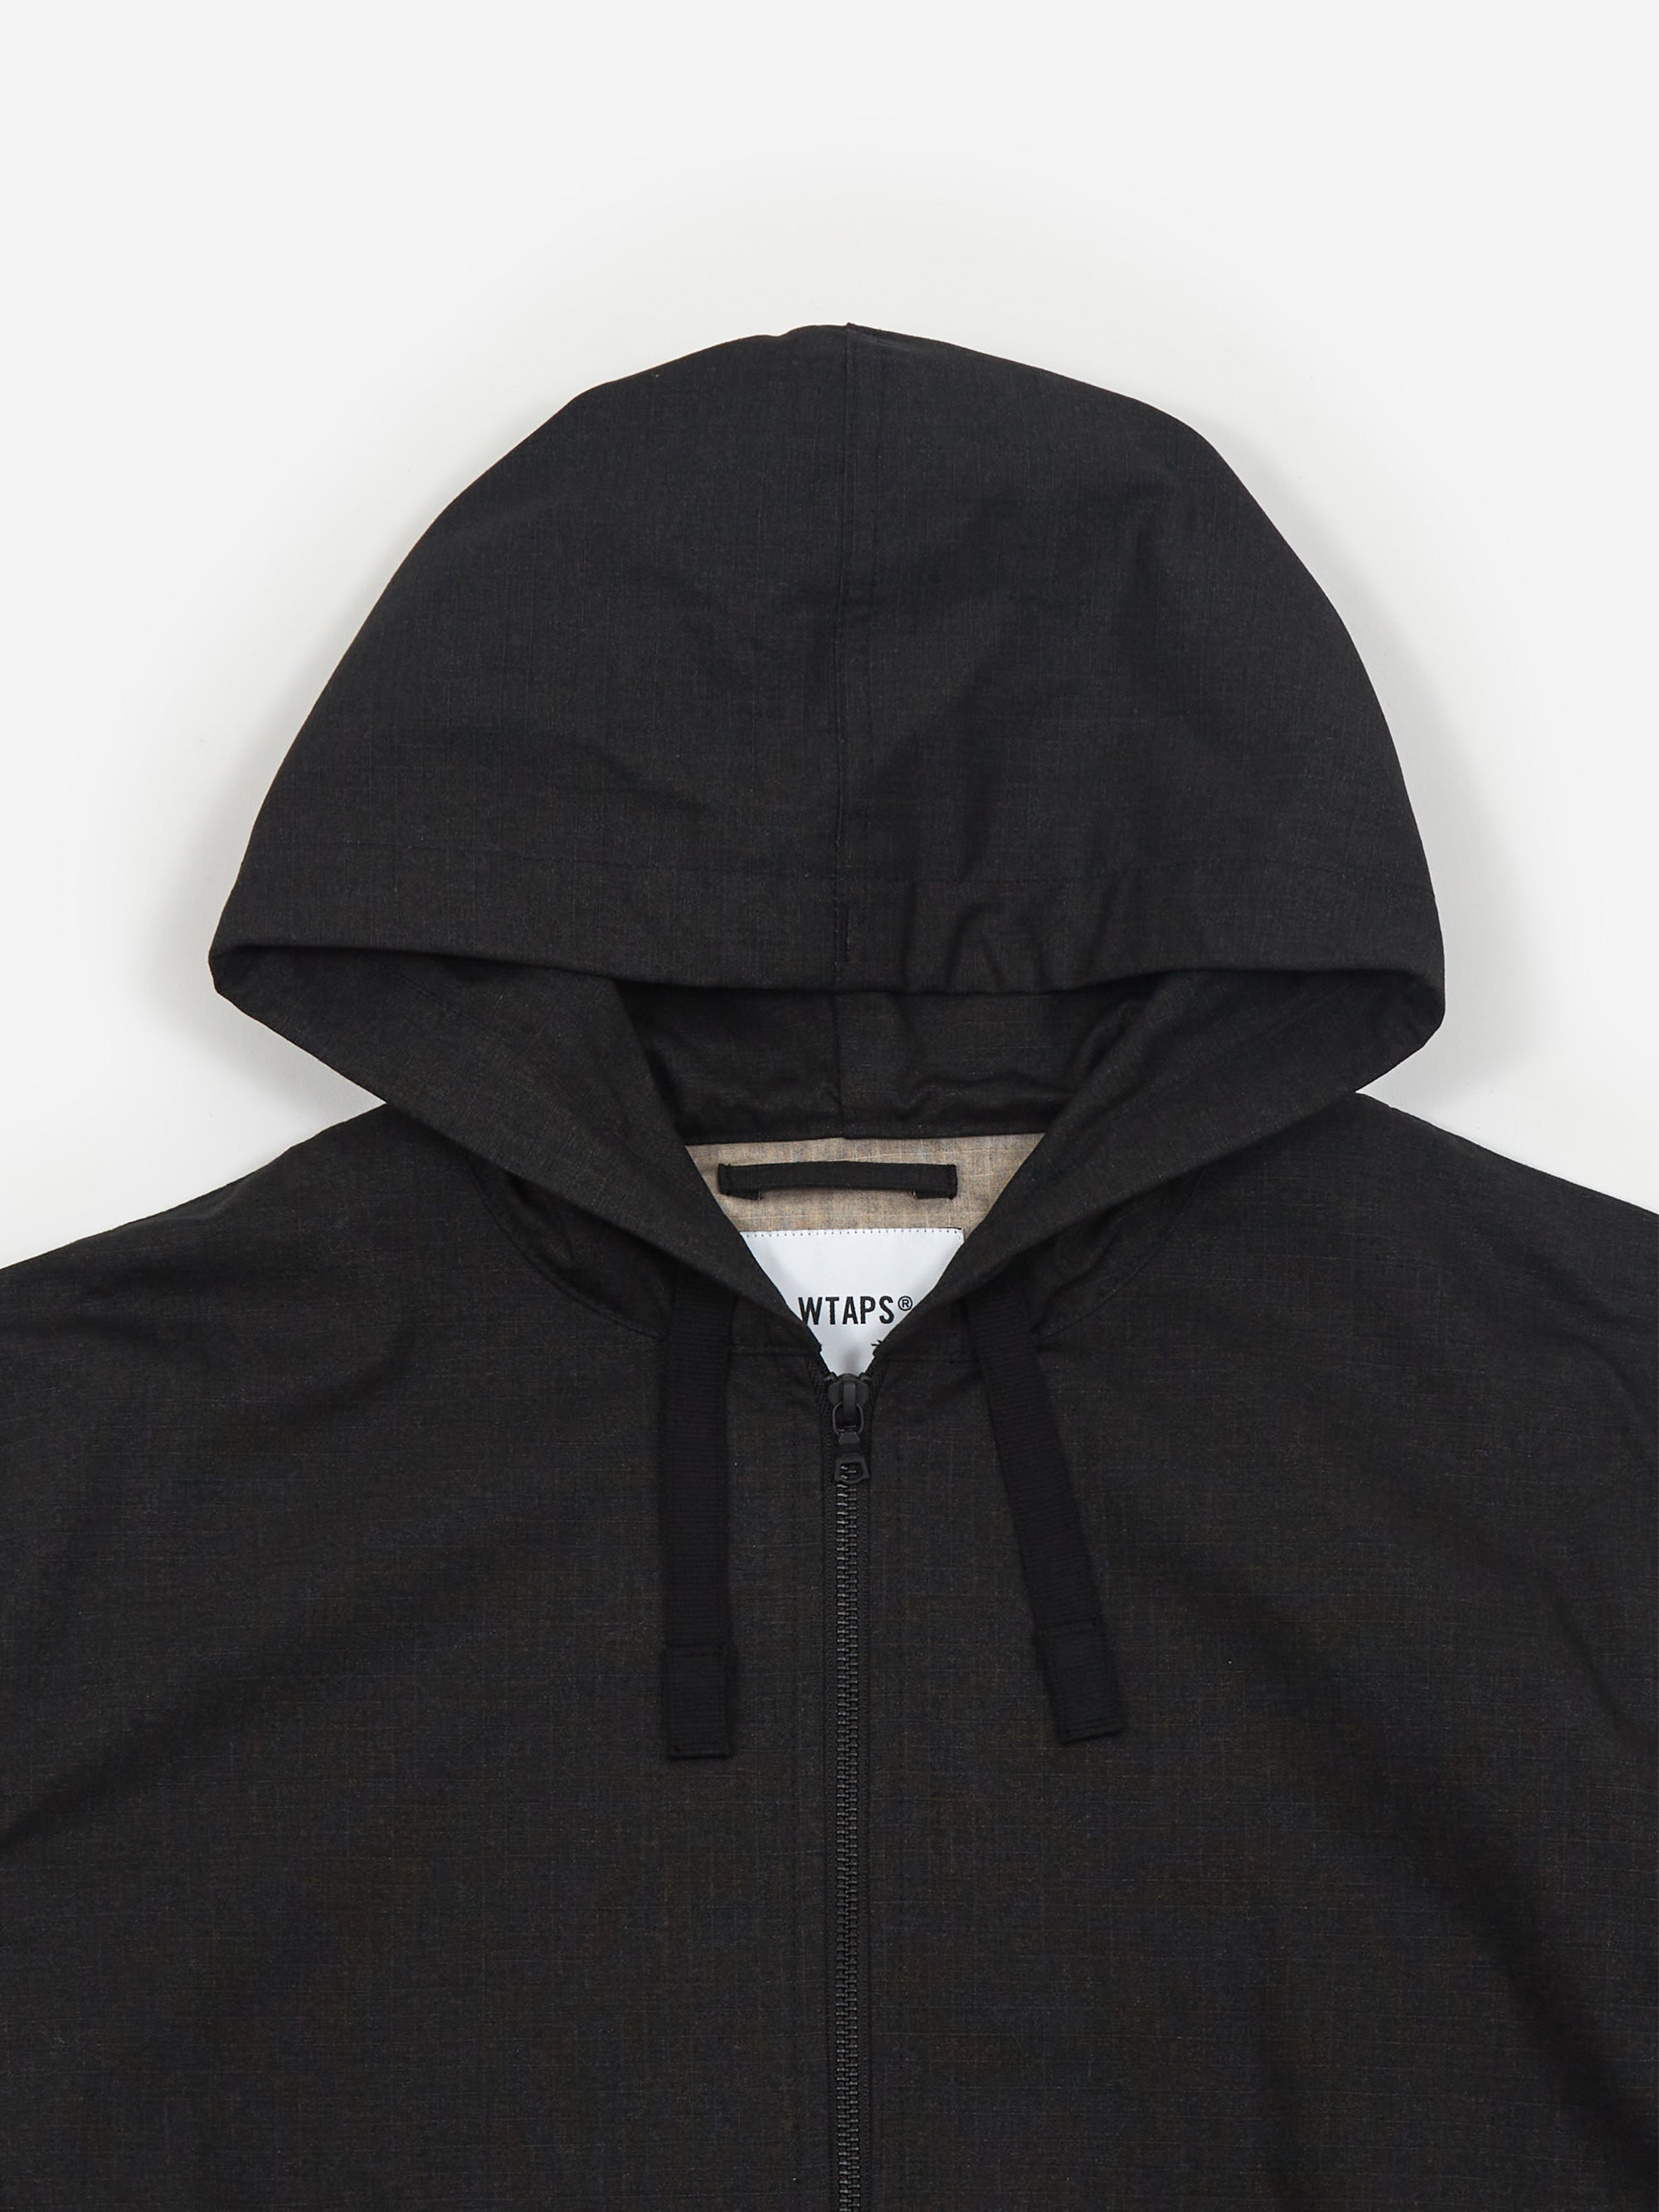 WTAPS Pab / Jacket / Cotton. Ripstop - Black – Goodhood